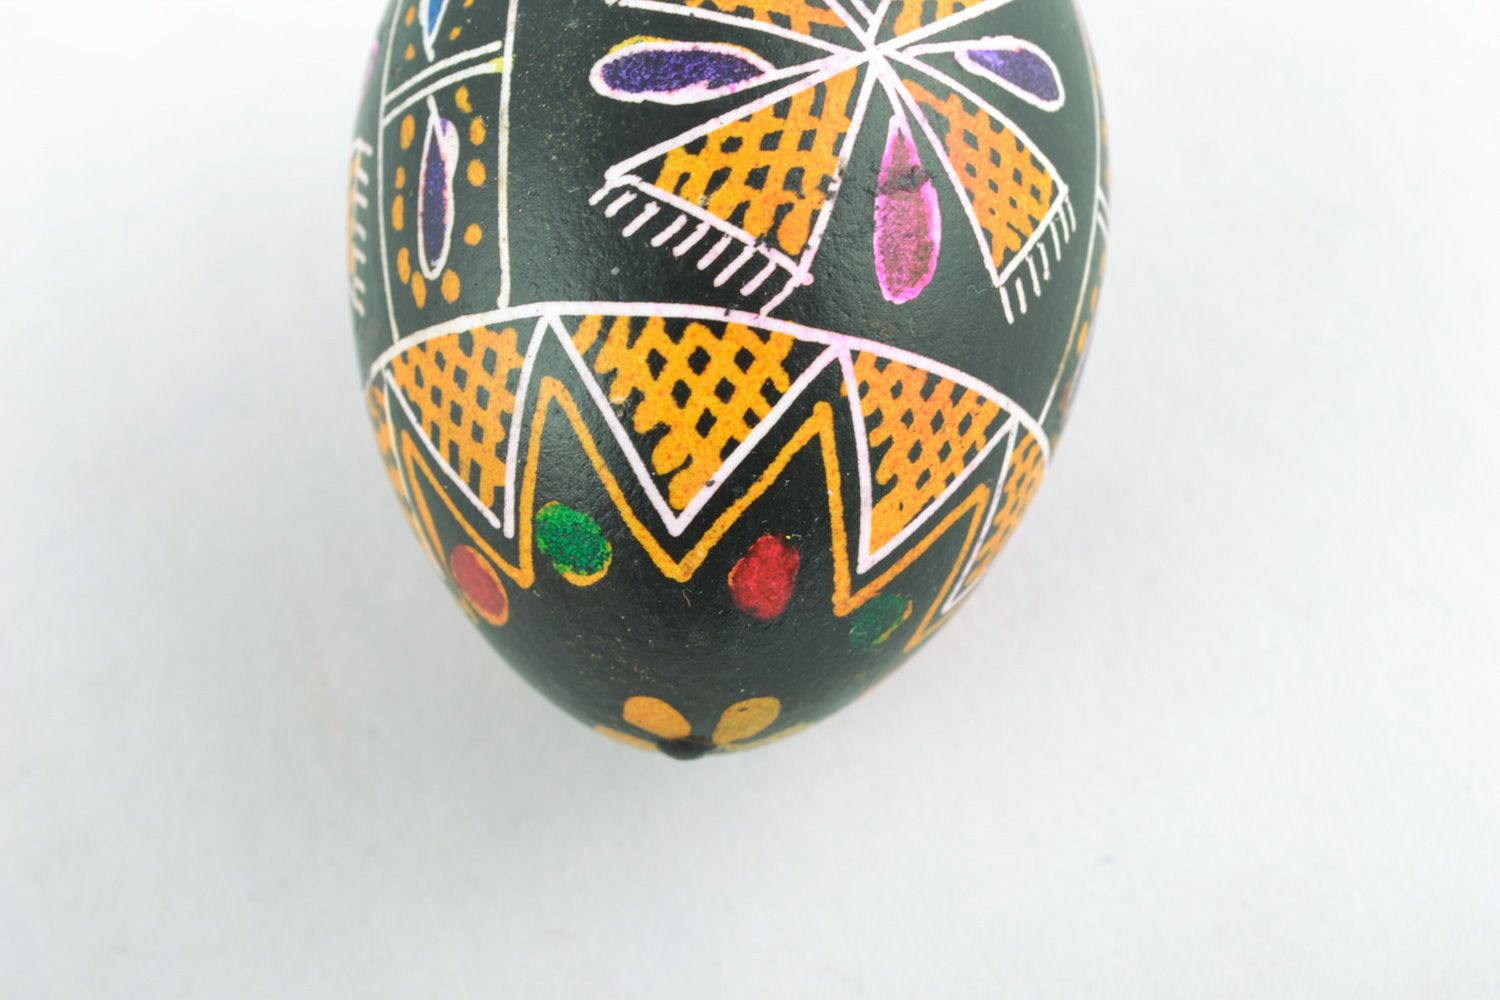 Beautiful handmade painted Easter egg photo 4